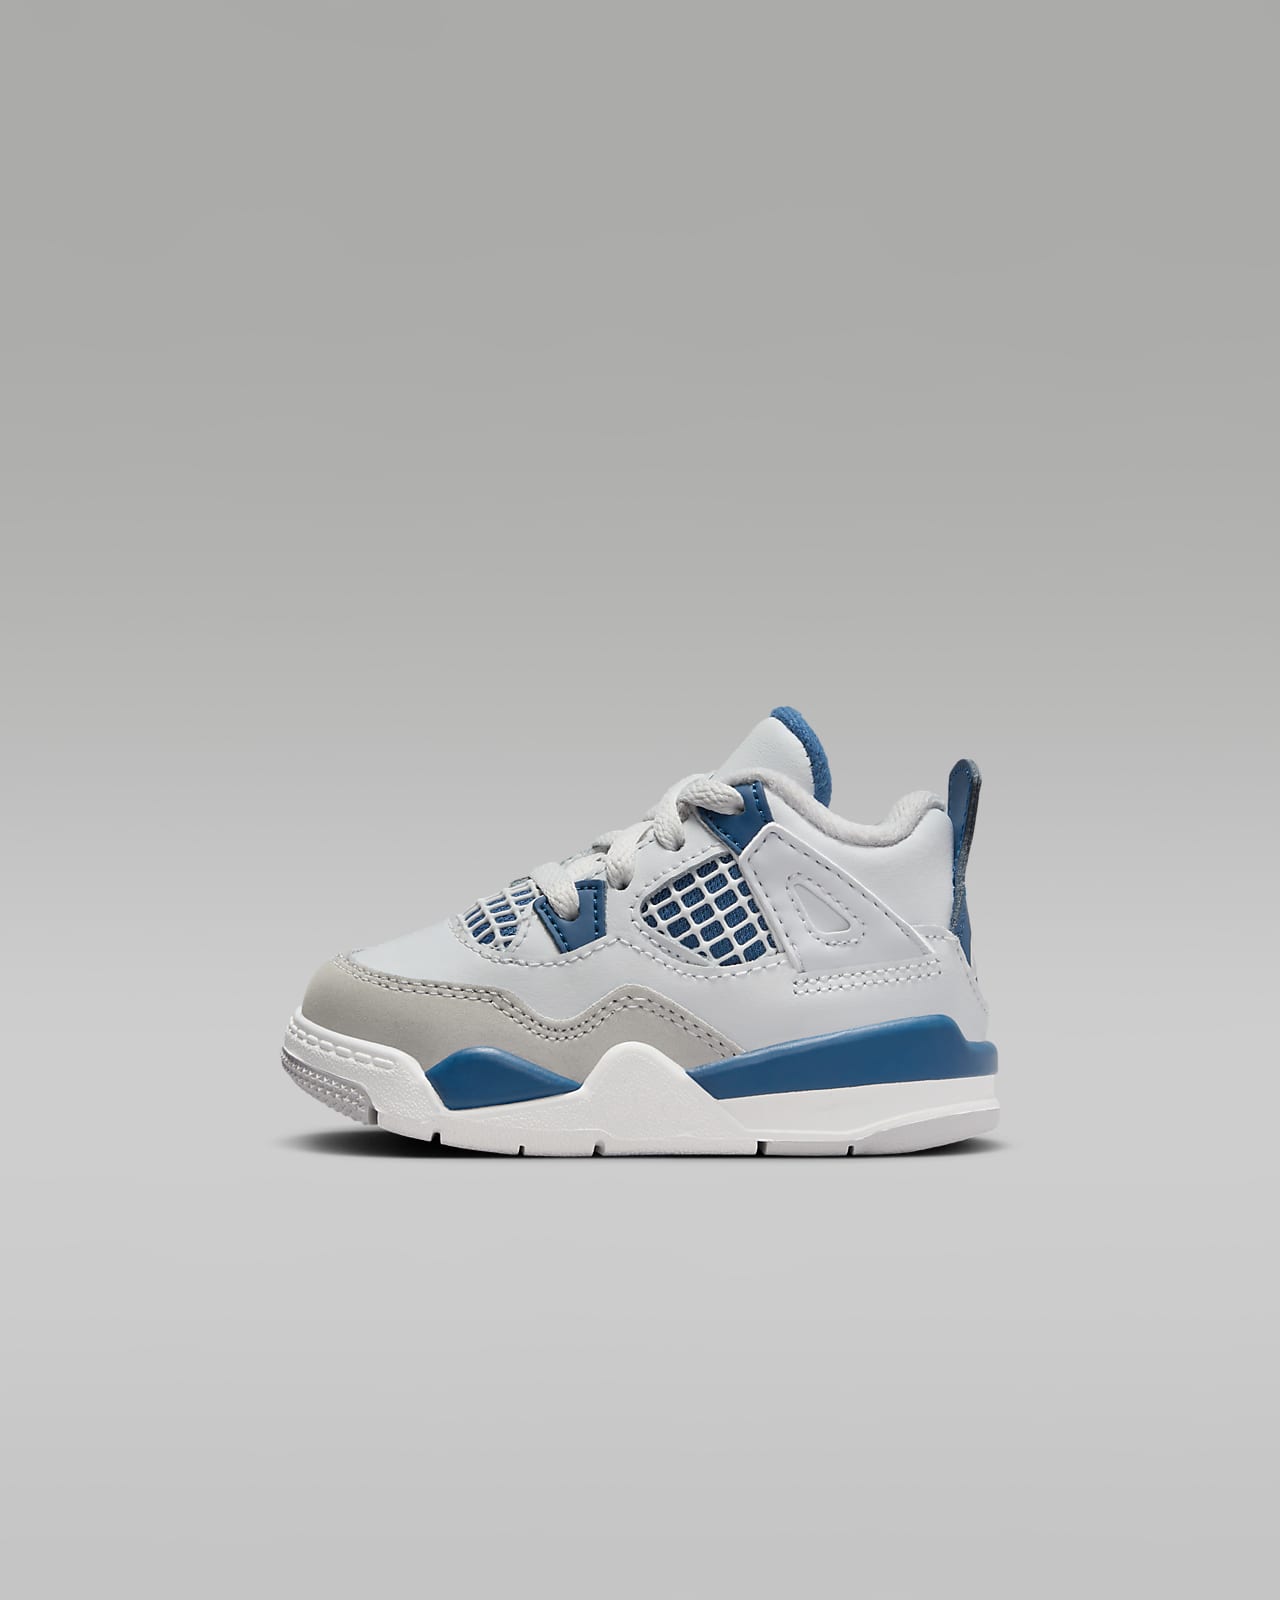 Jordan 4 Retro 'Industrial Blue' Baby/Toddler Shoes